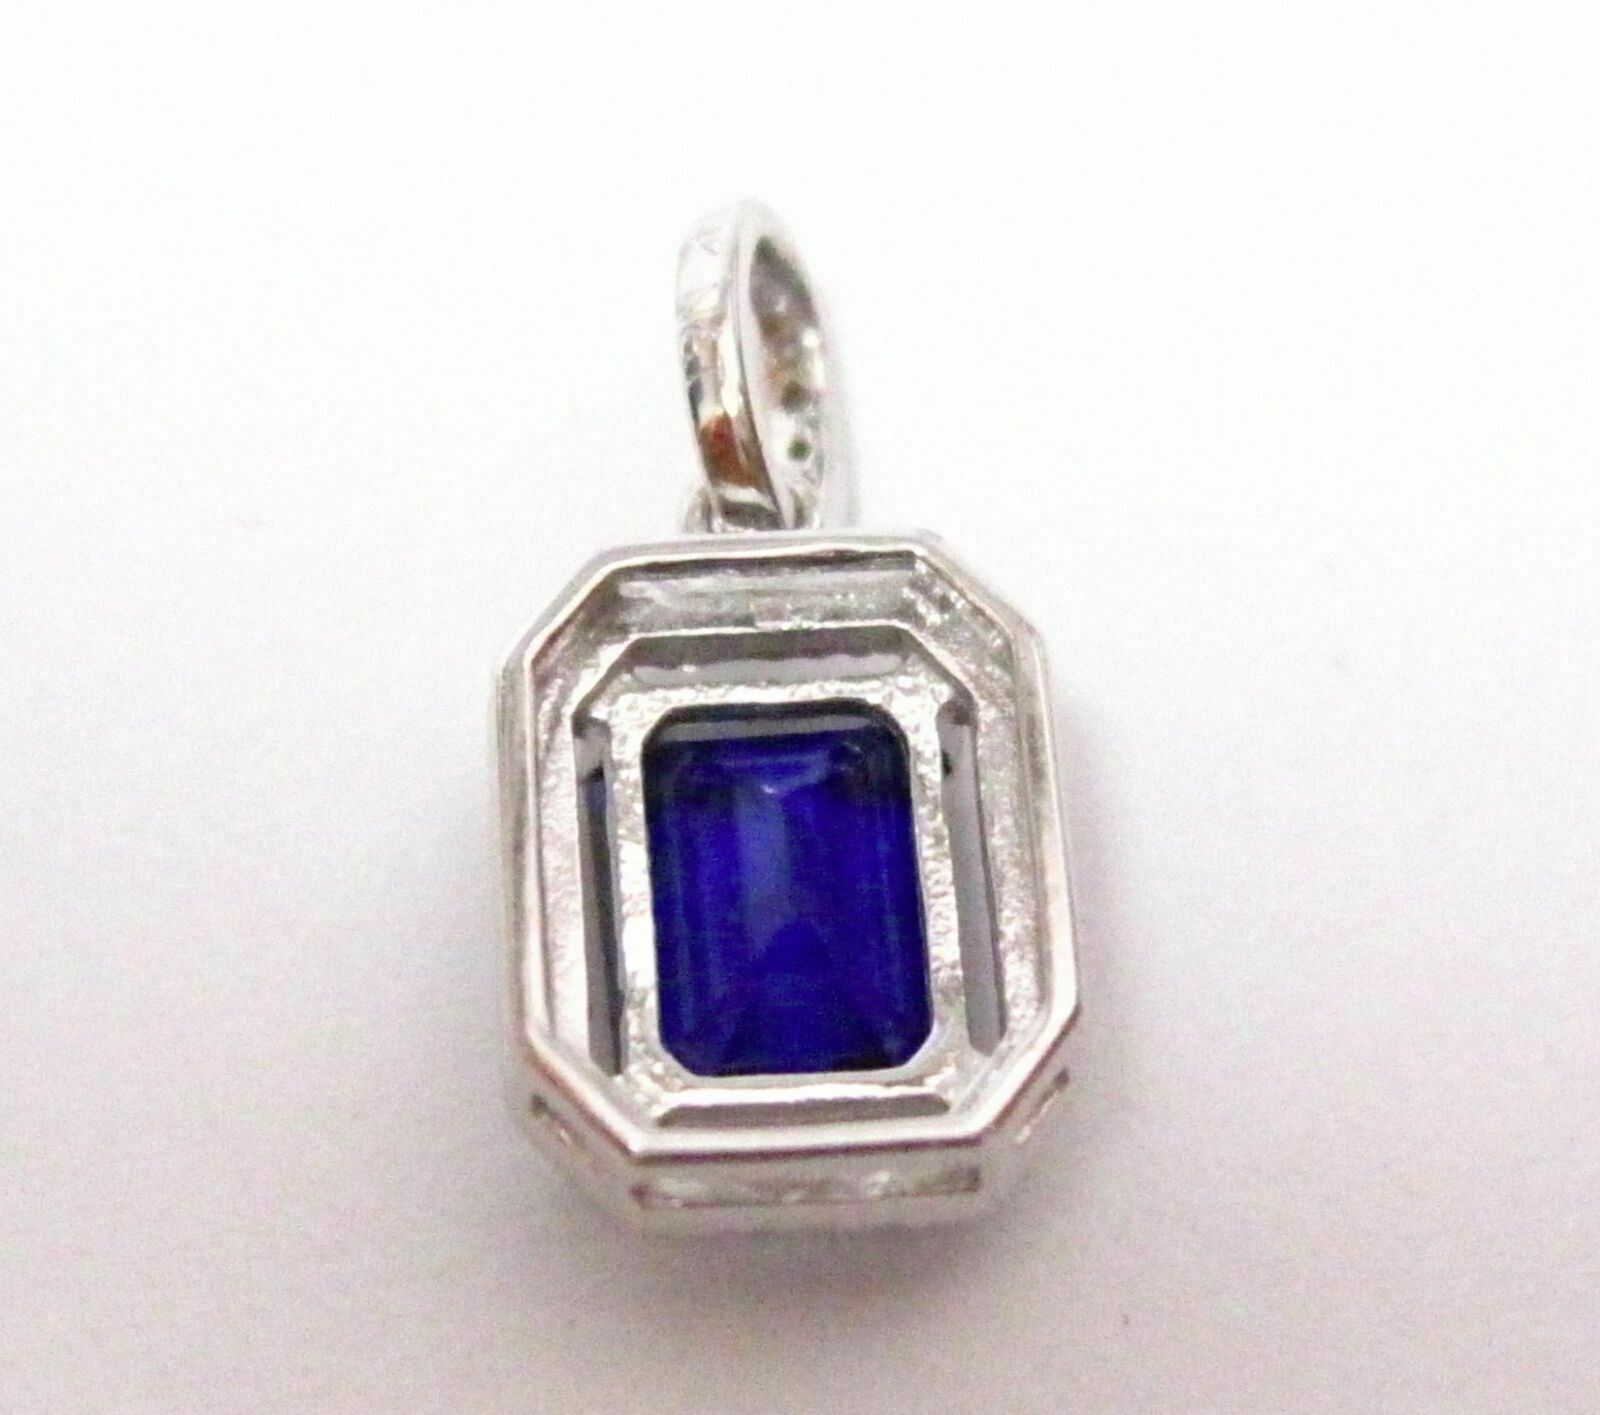 1.30Ct Radiant Cut Blue Sapphire & Diamond Accents Pendant 14k White Gold